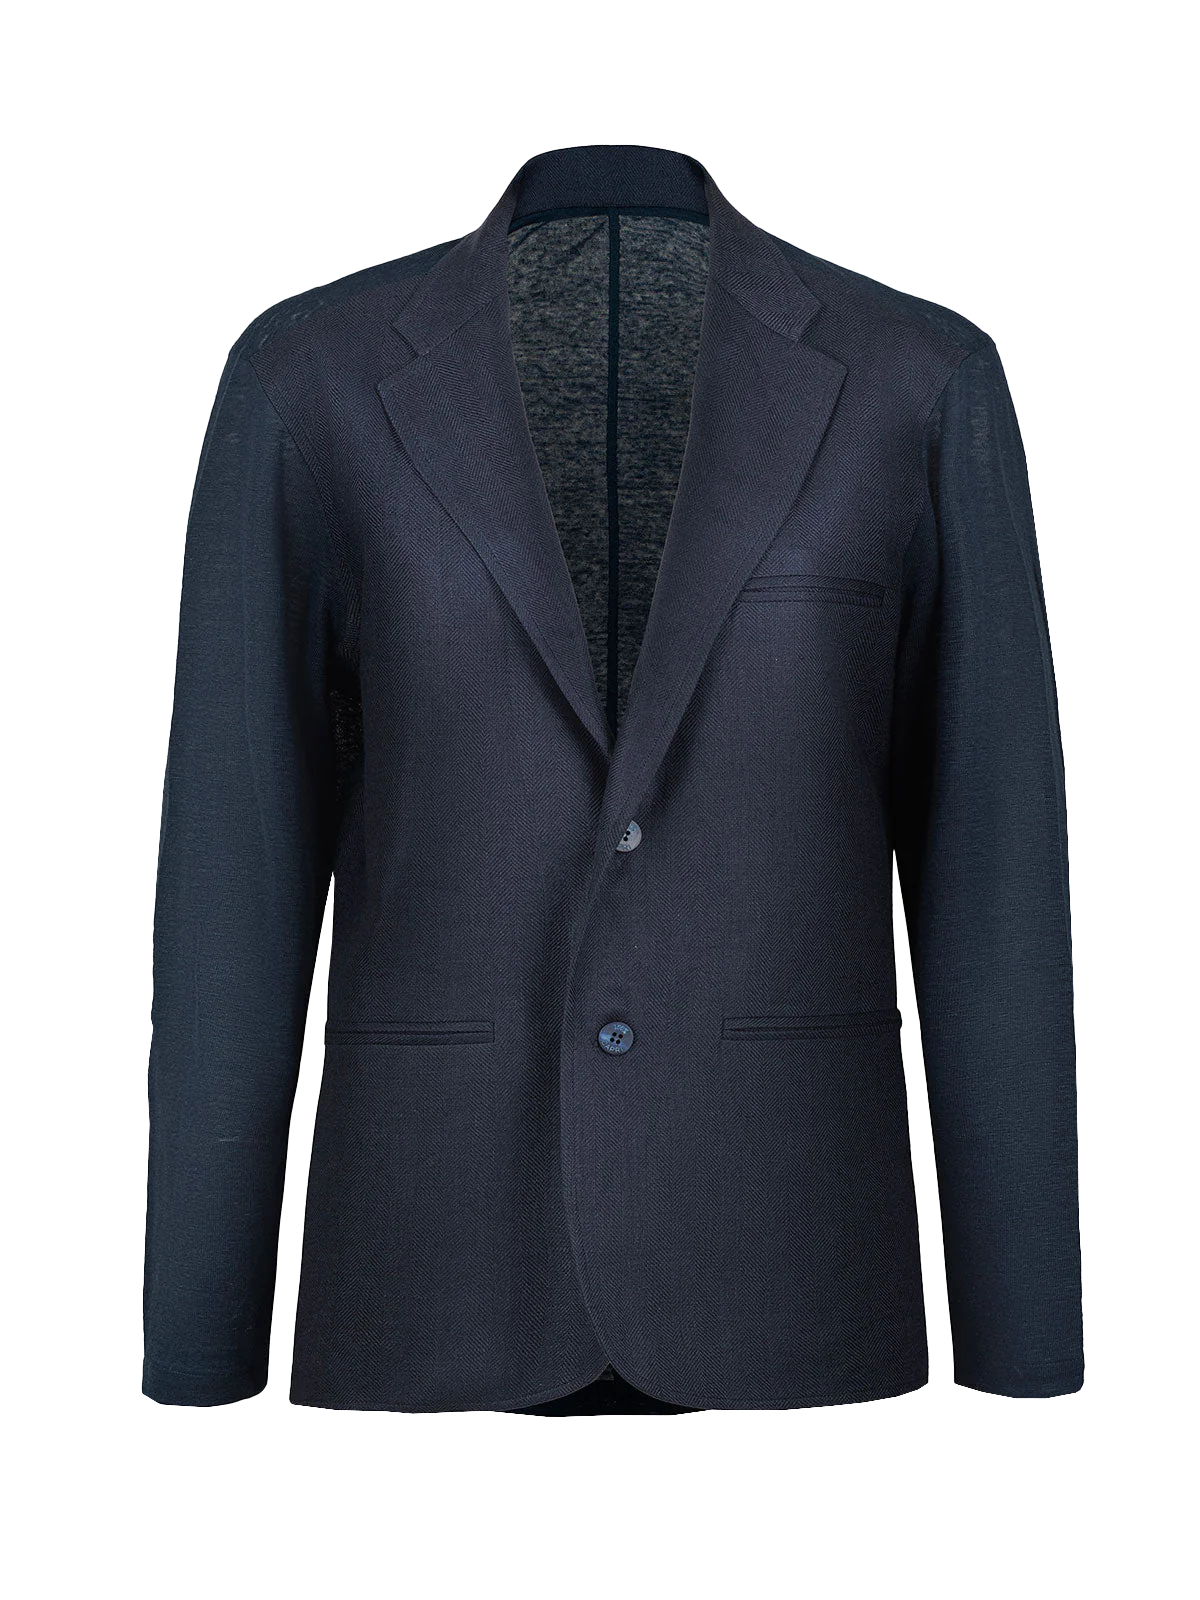 Giacca Sud Man 100% Capri blue linen jacket front